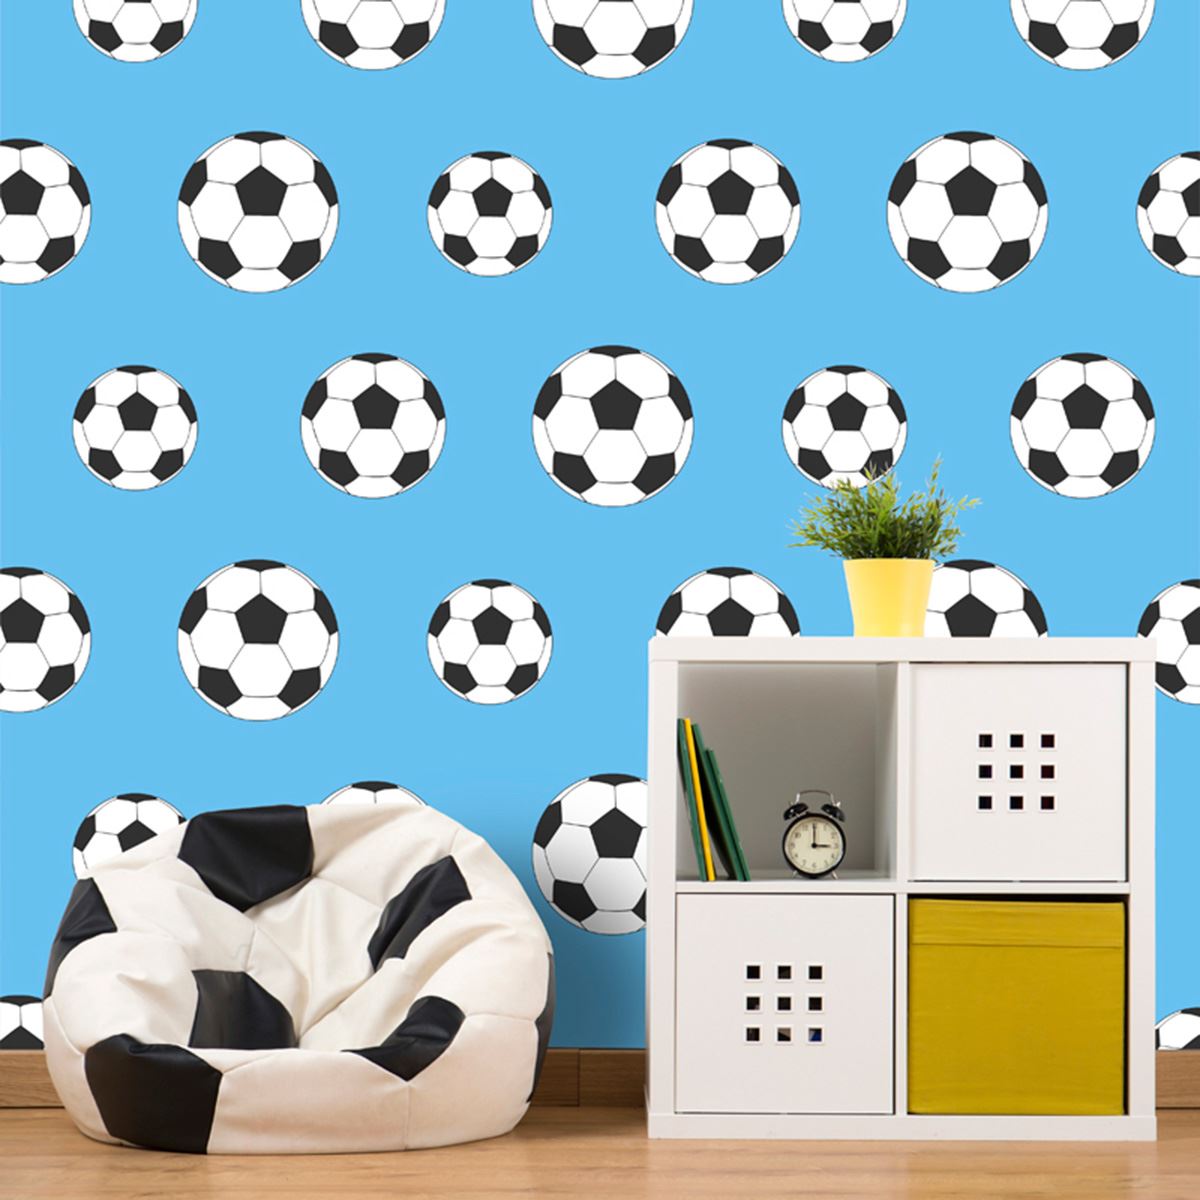 boys football wallpaper,football,soccer ball,ball,pattern,games